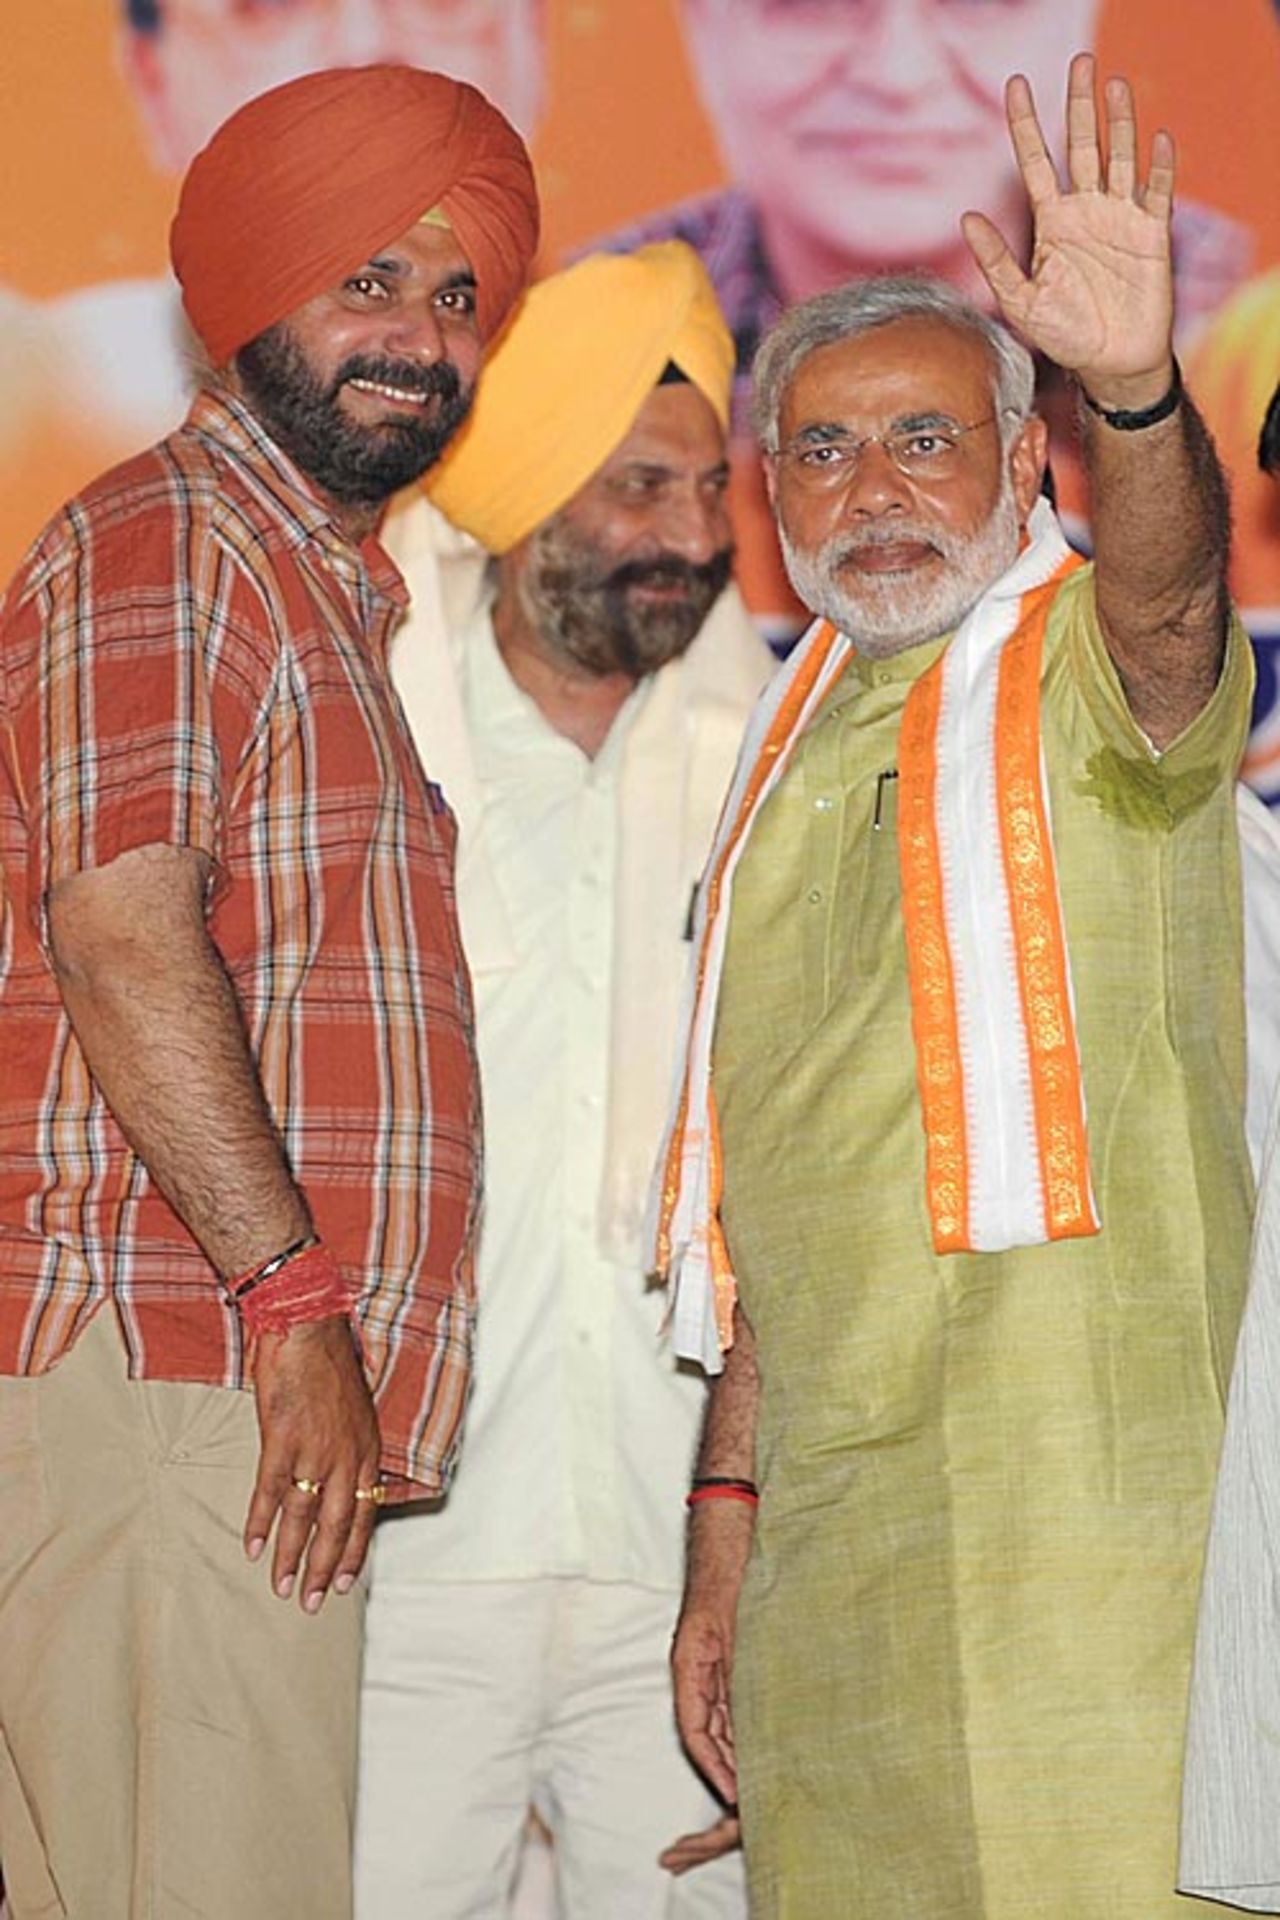 Navjot Singh Sidhu with the Gujarat Chief Minister Narendra Modi, Amritsar, May 8, 2009